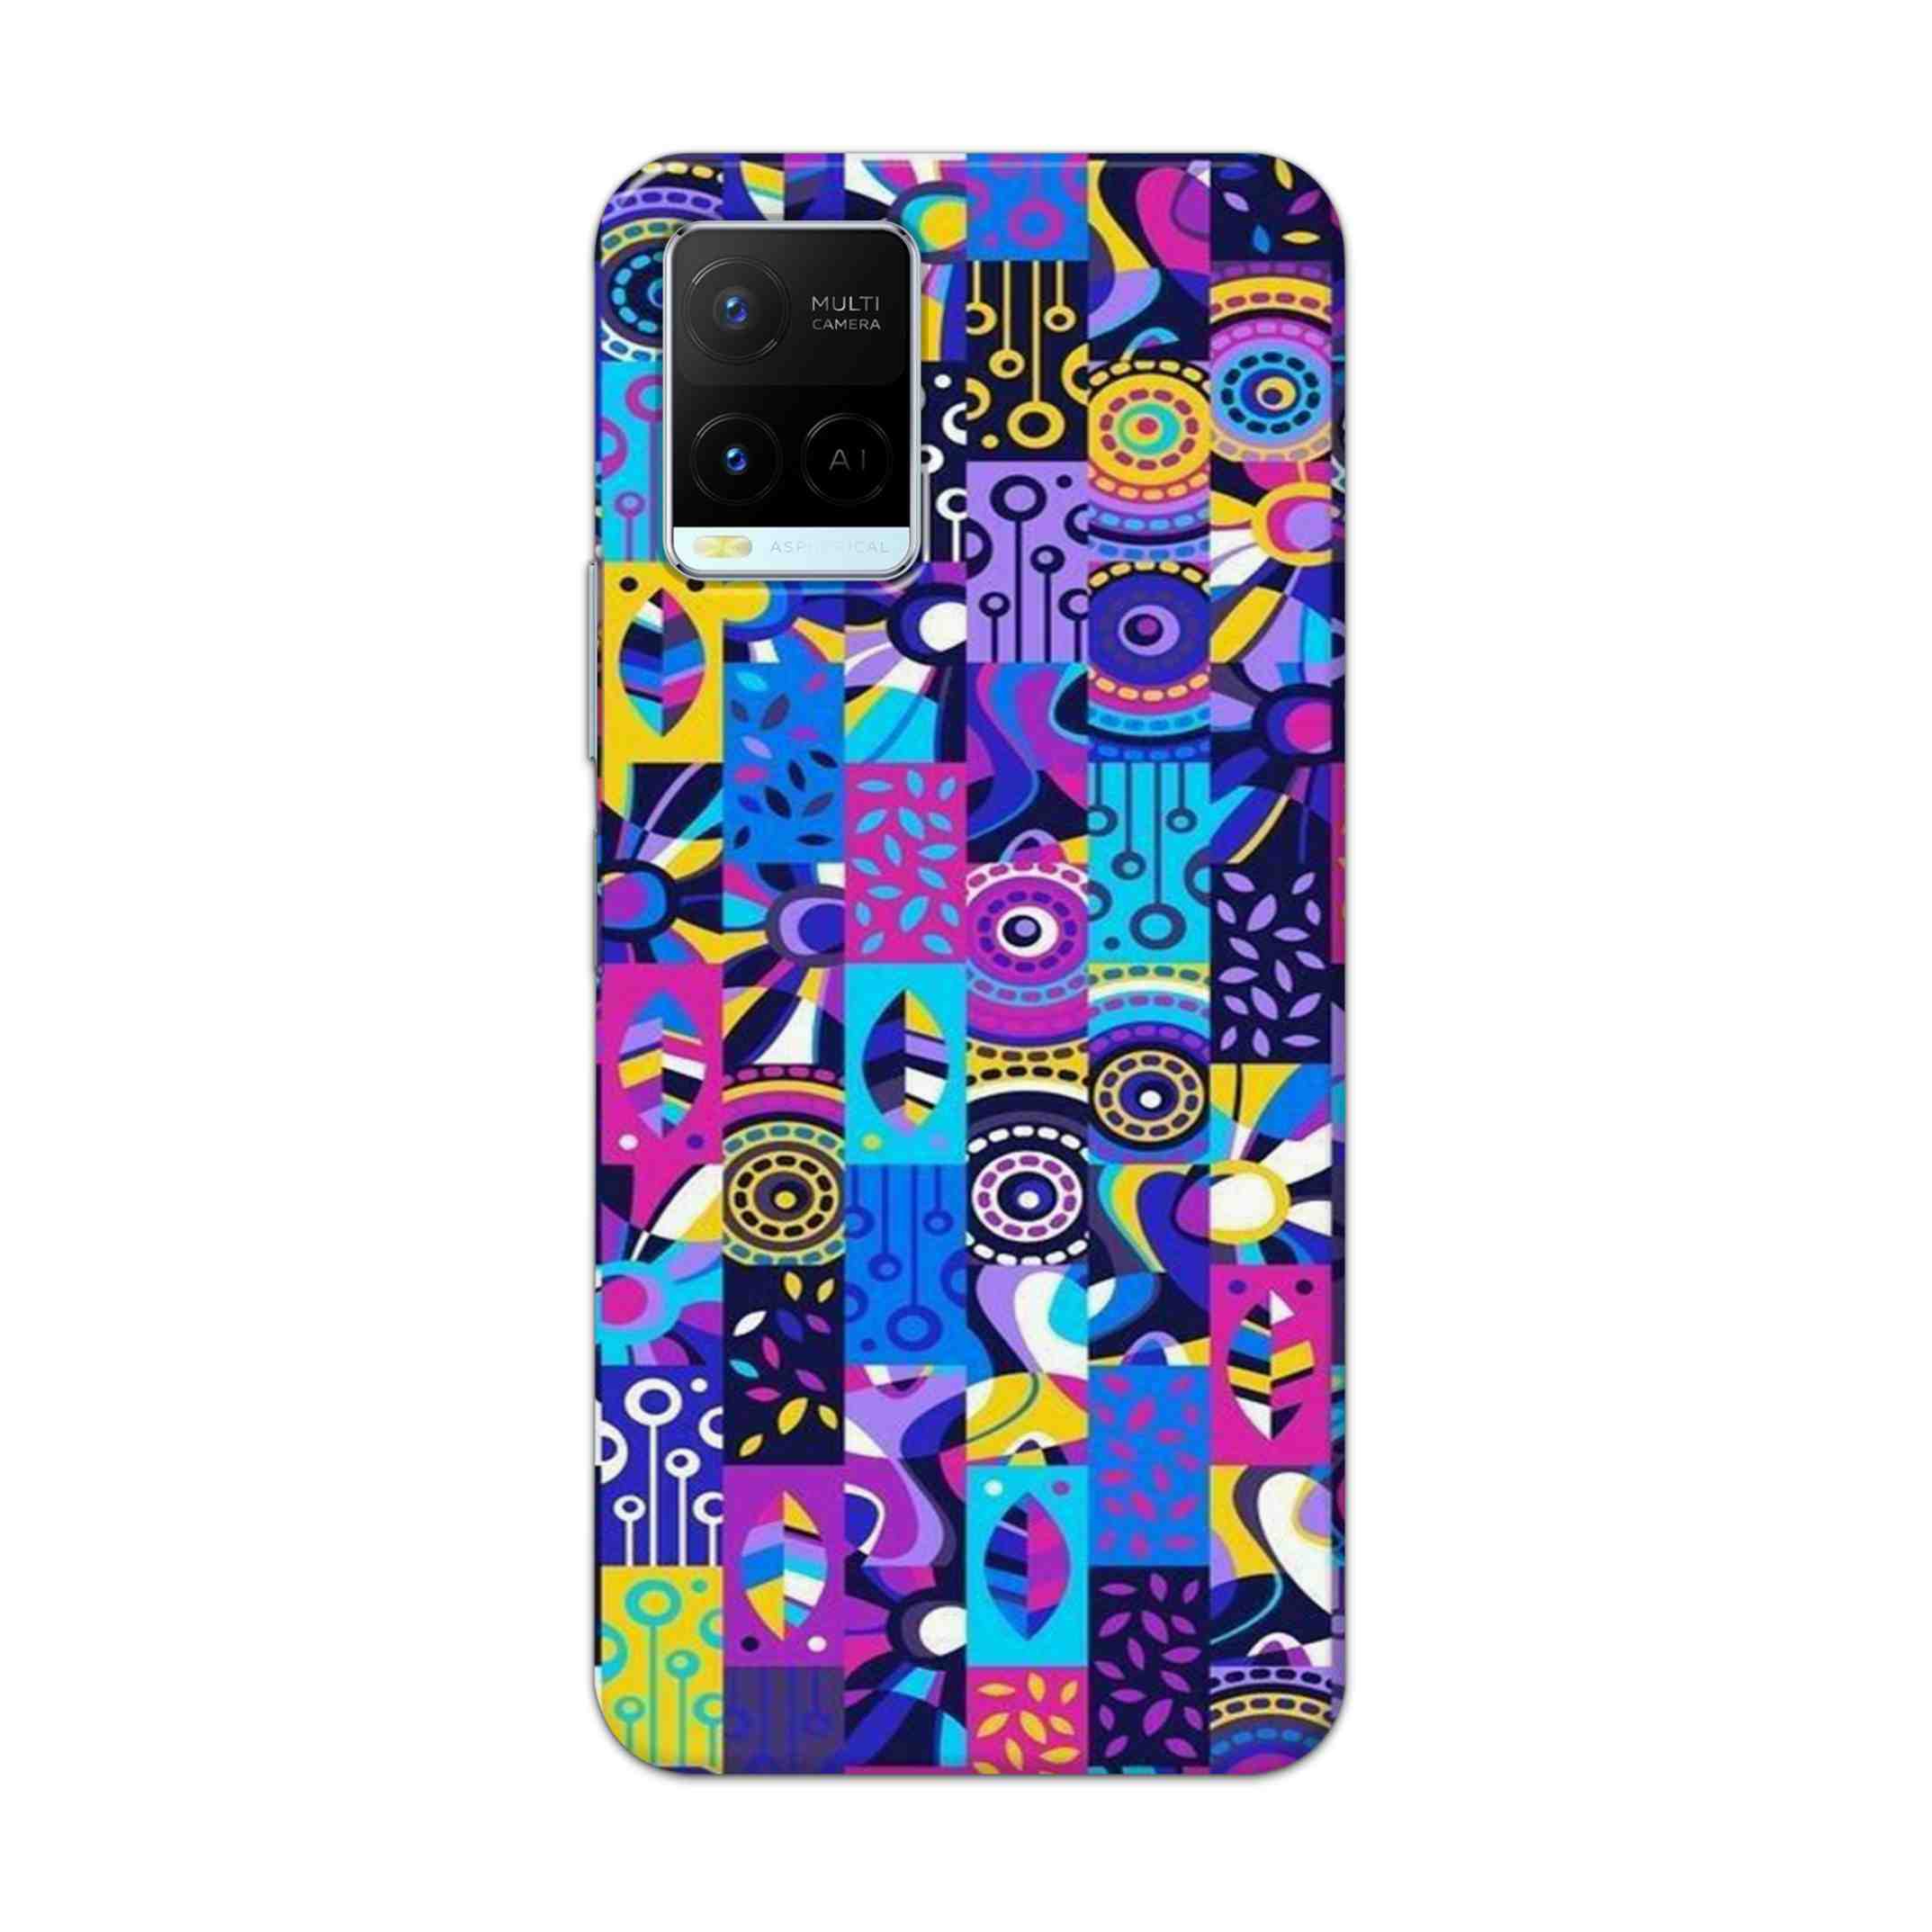 Buy Rainbow Art Hard Back Mobile Phone Case Cover For Vivo Y21 2021 Online